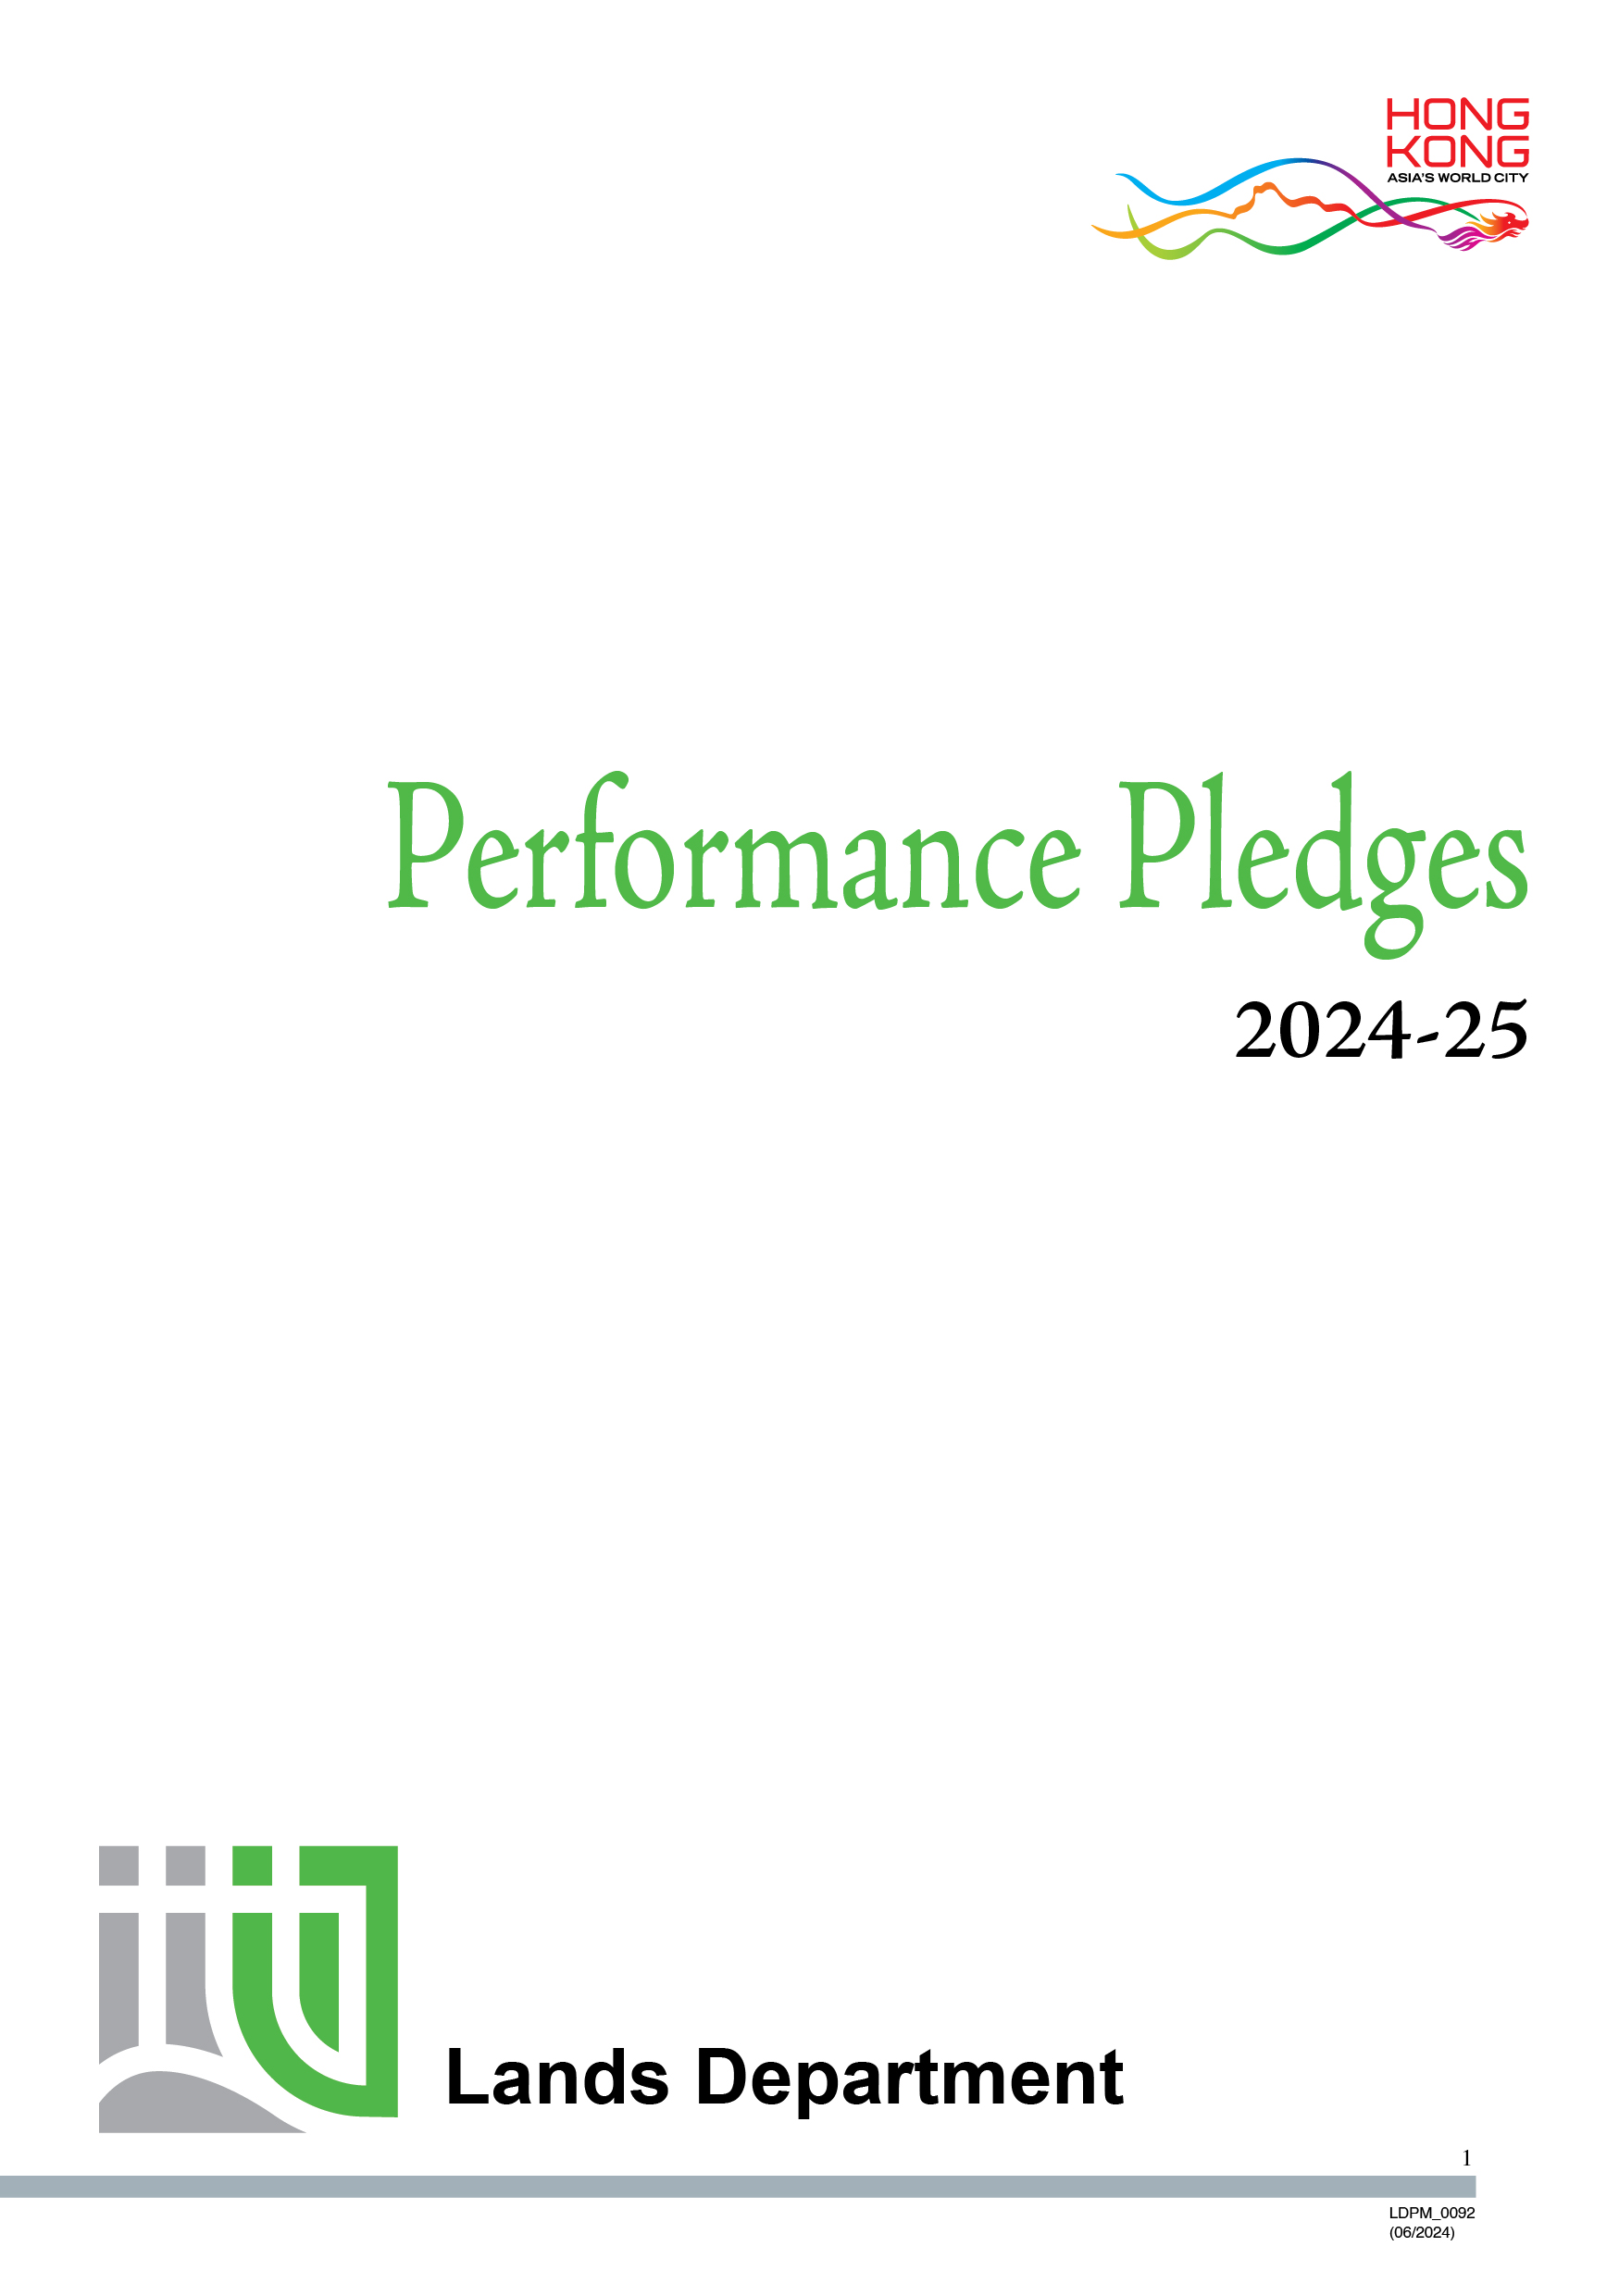 Performance Pledges (2024 - 25)